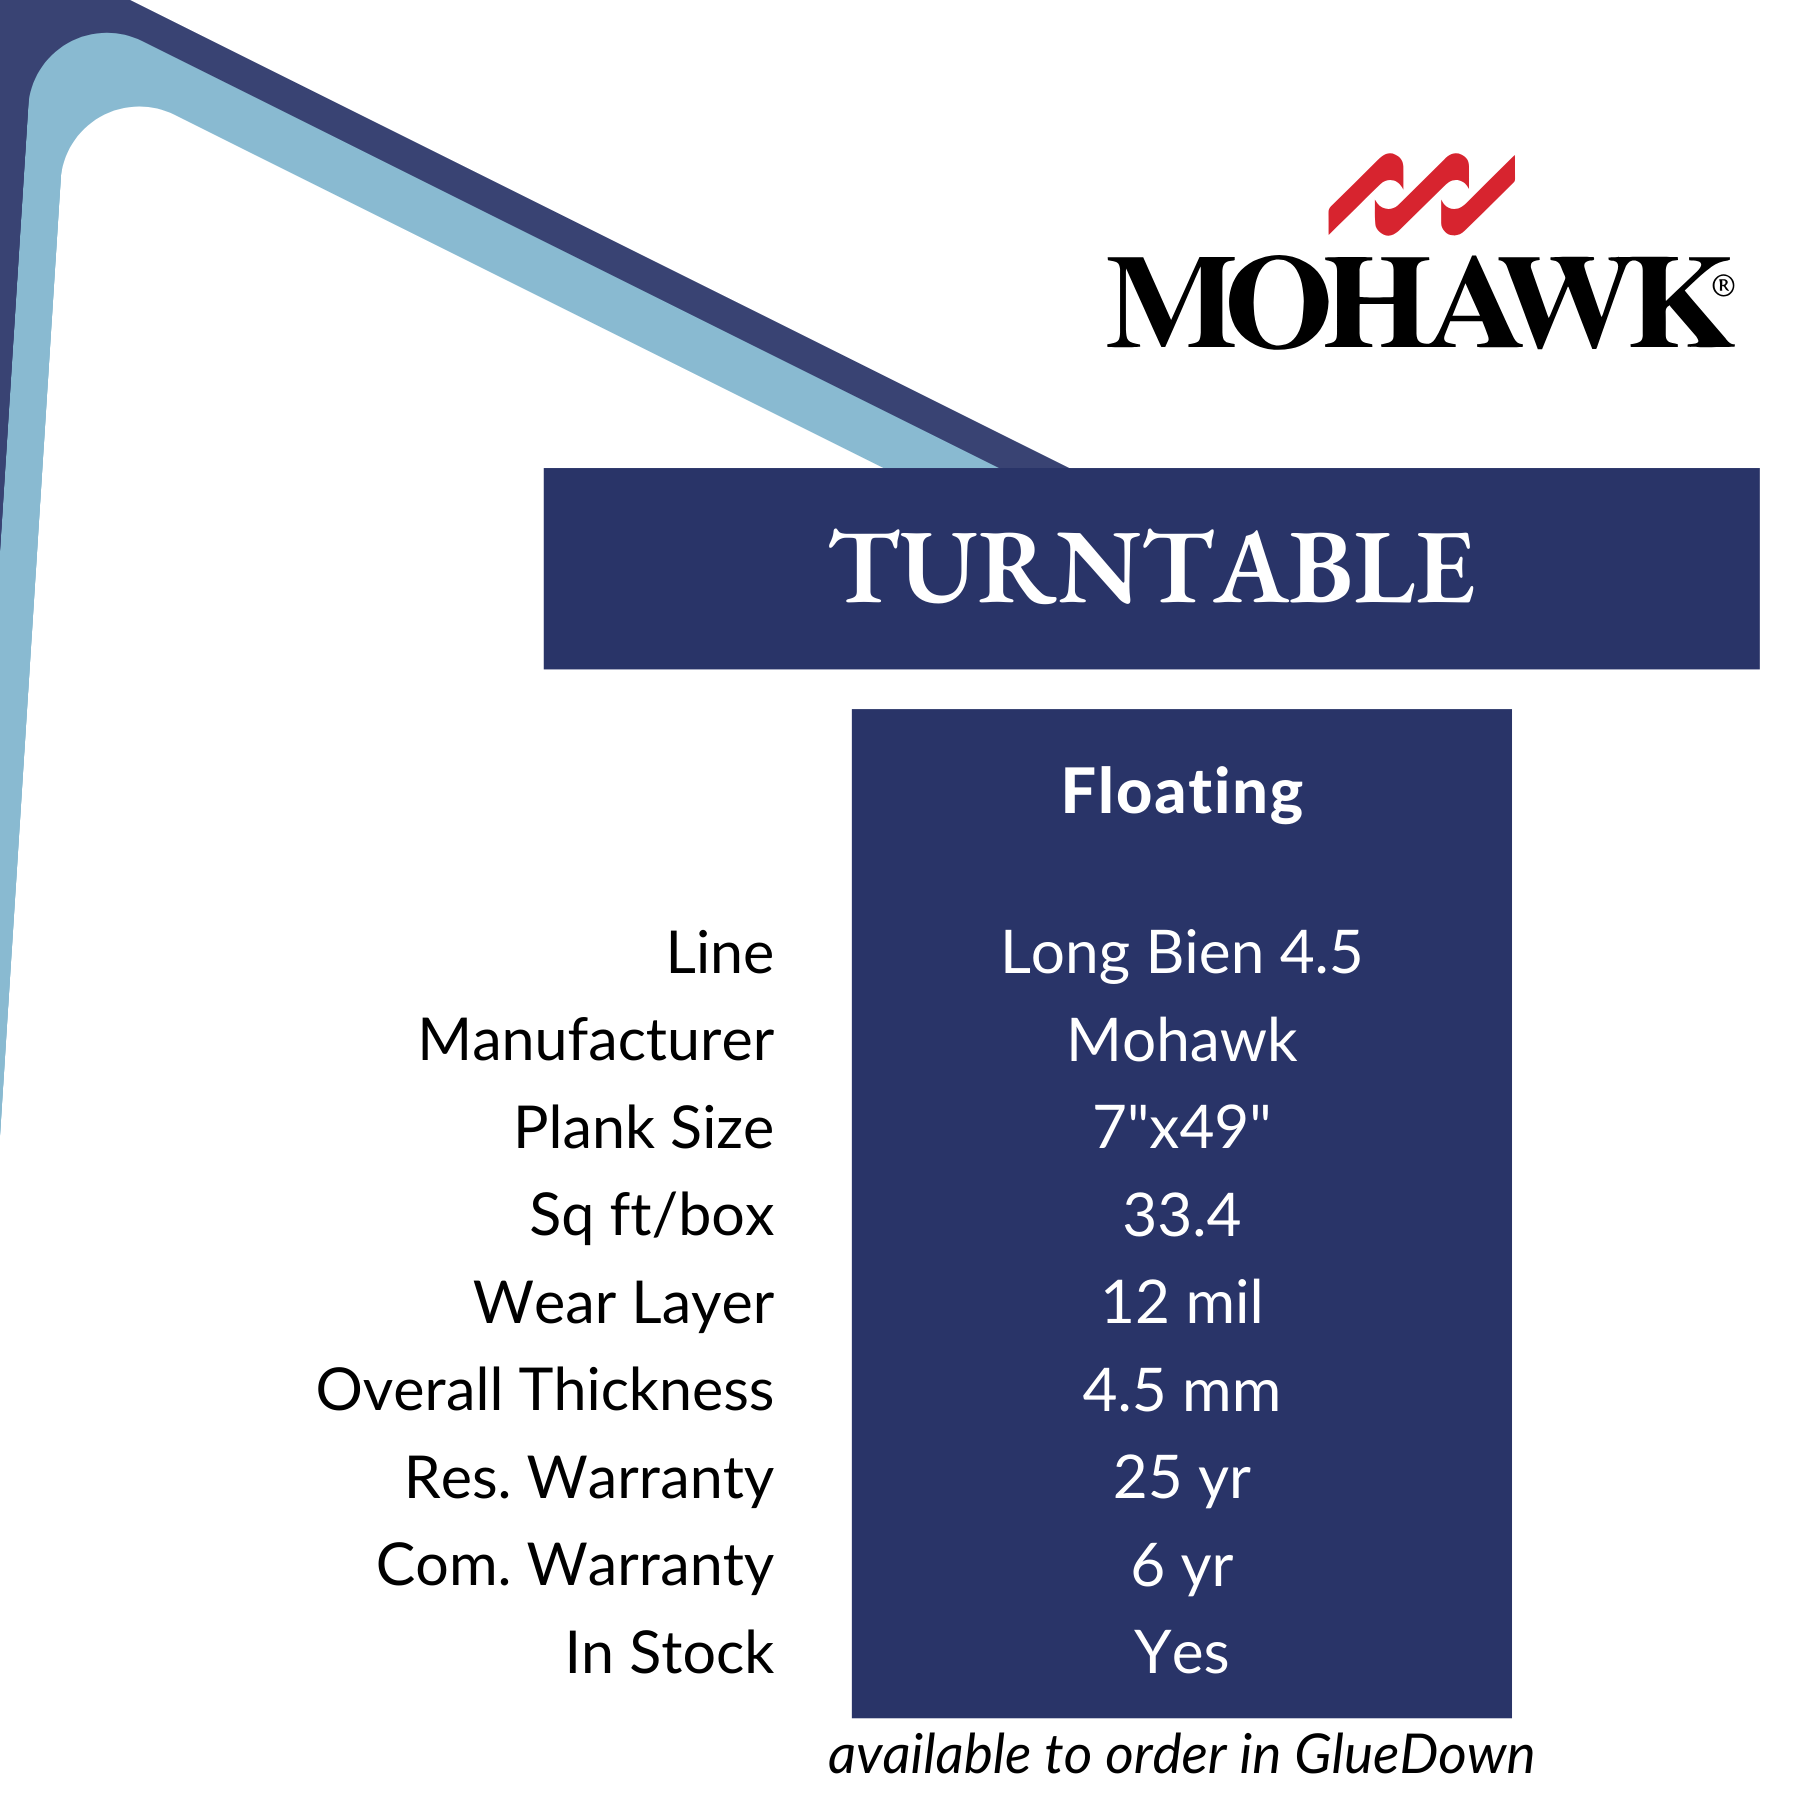 Turntable by Mohawk LVT Flooring at Calhoun's Specs: 12 mil wear layer